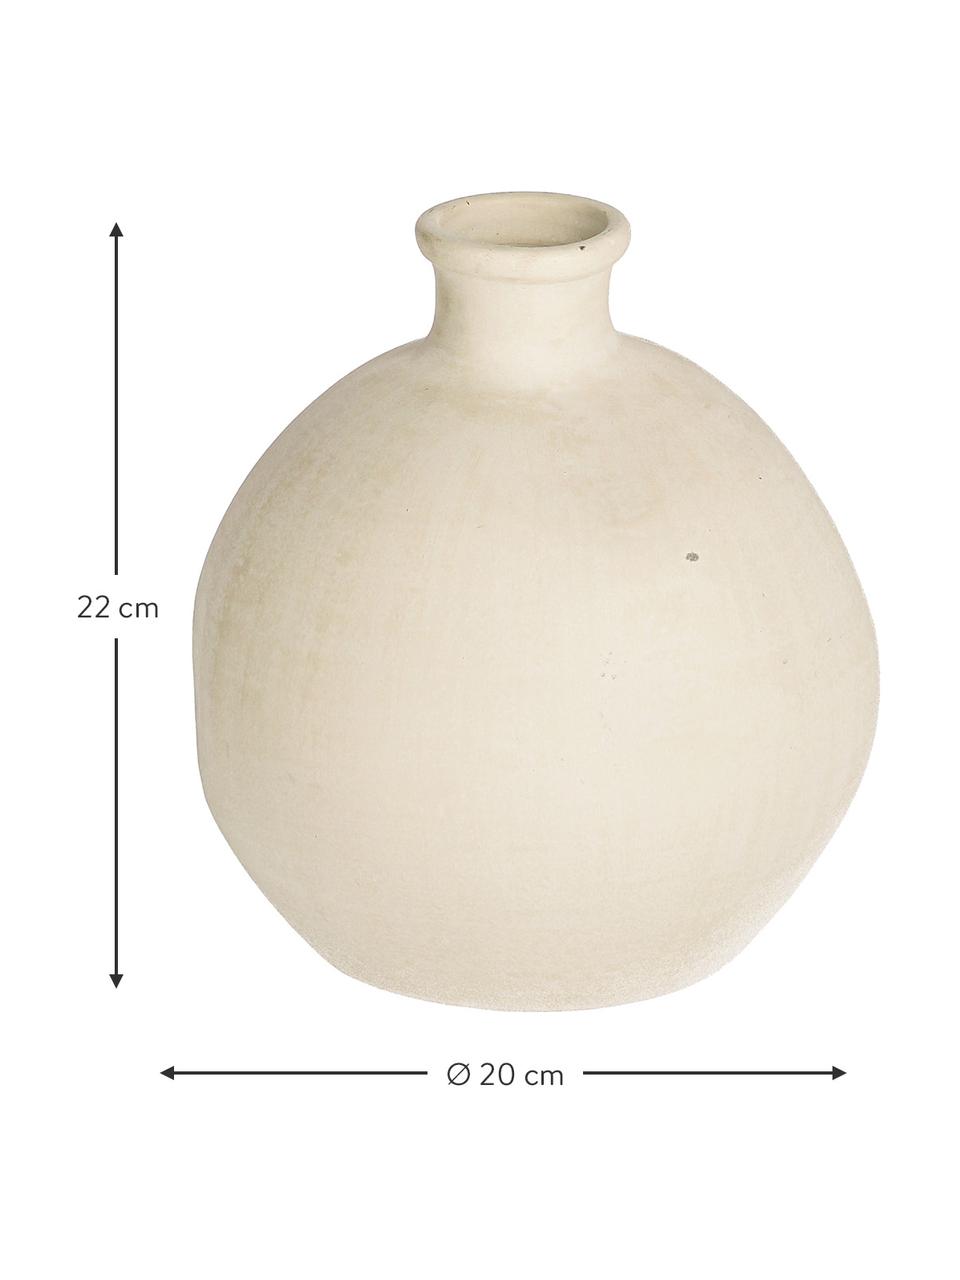 Kugel-Vase Caetana aus Keramik in Beige, Keramik, Beige, Ø 20 x H 22 cm